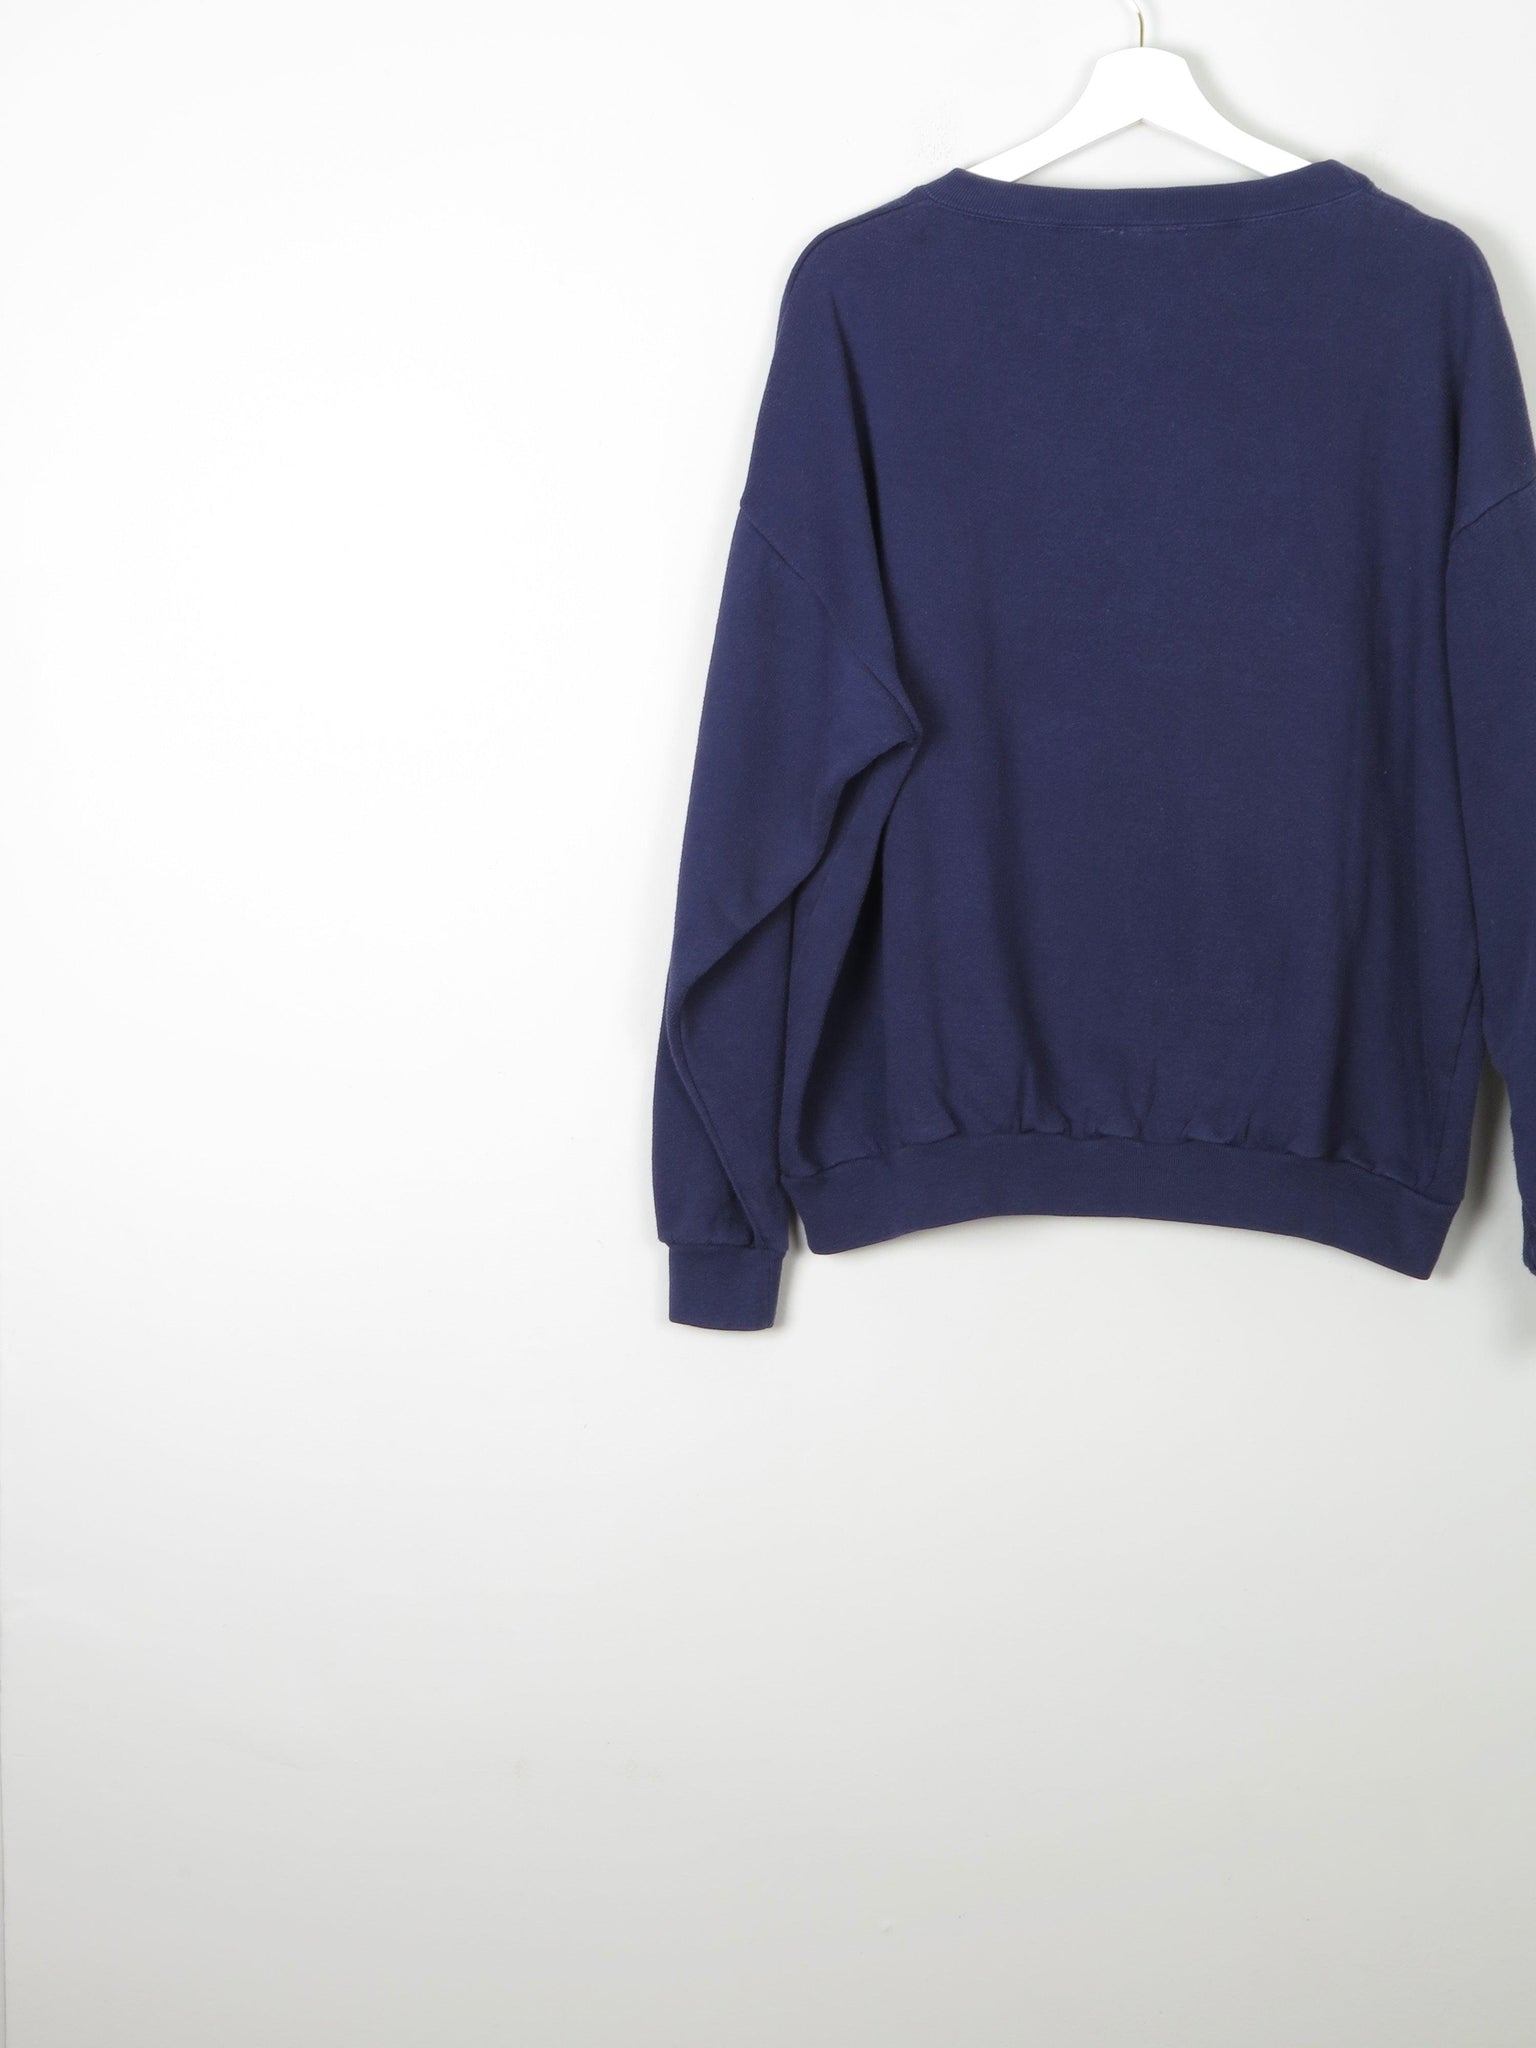 Women's Cropped Dallas Cowboys Navy Vintage Sweatshirt S/M - The Harlequin